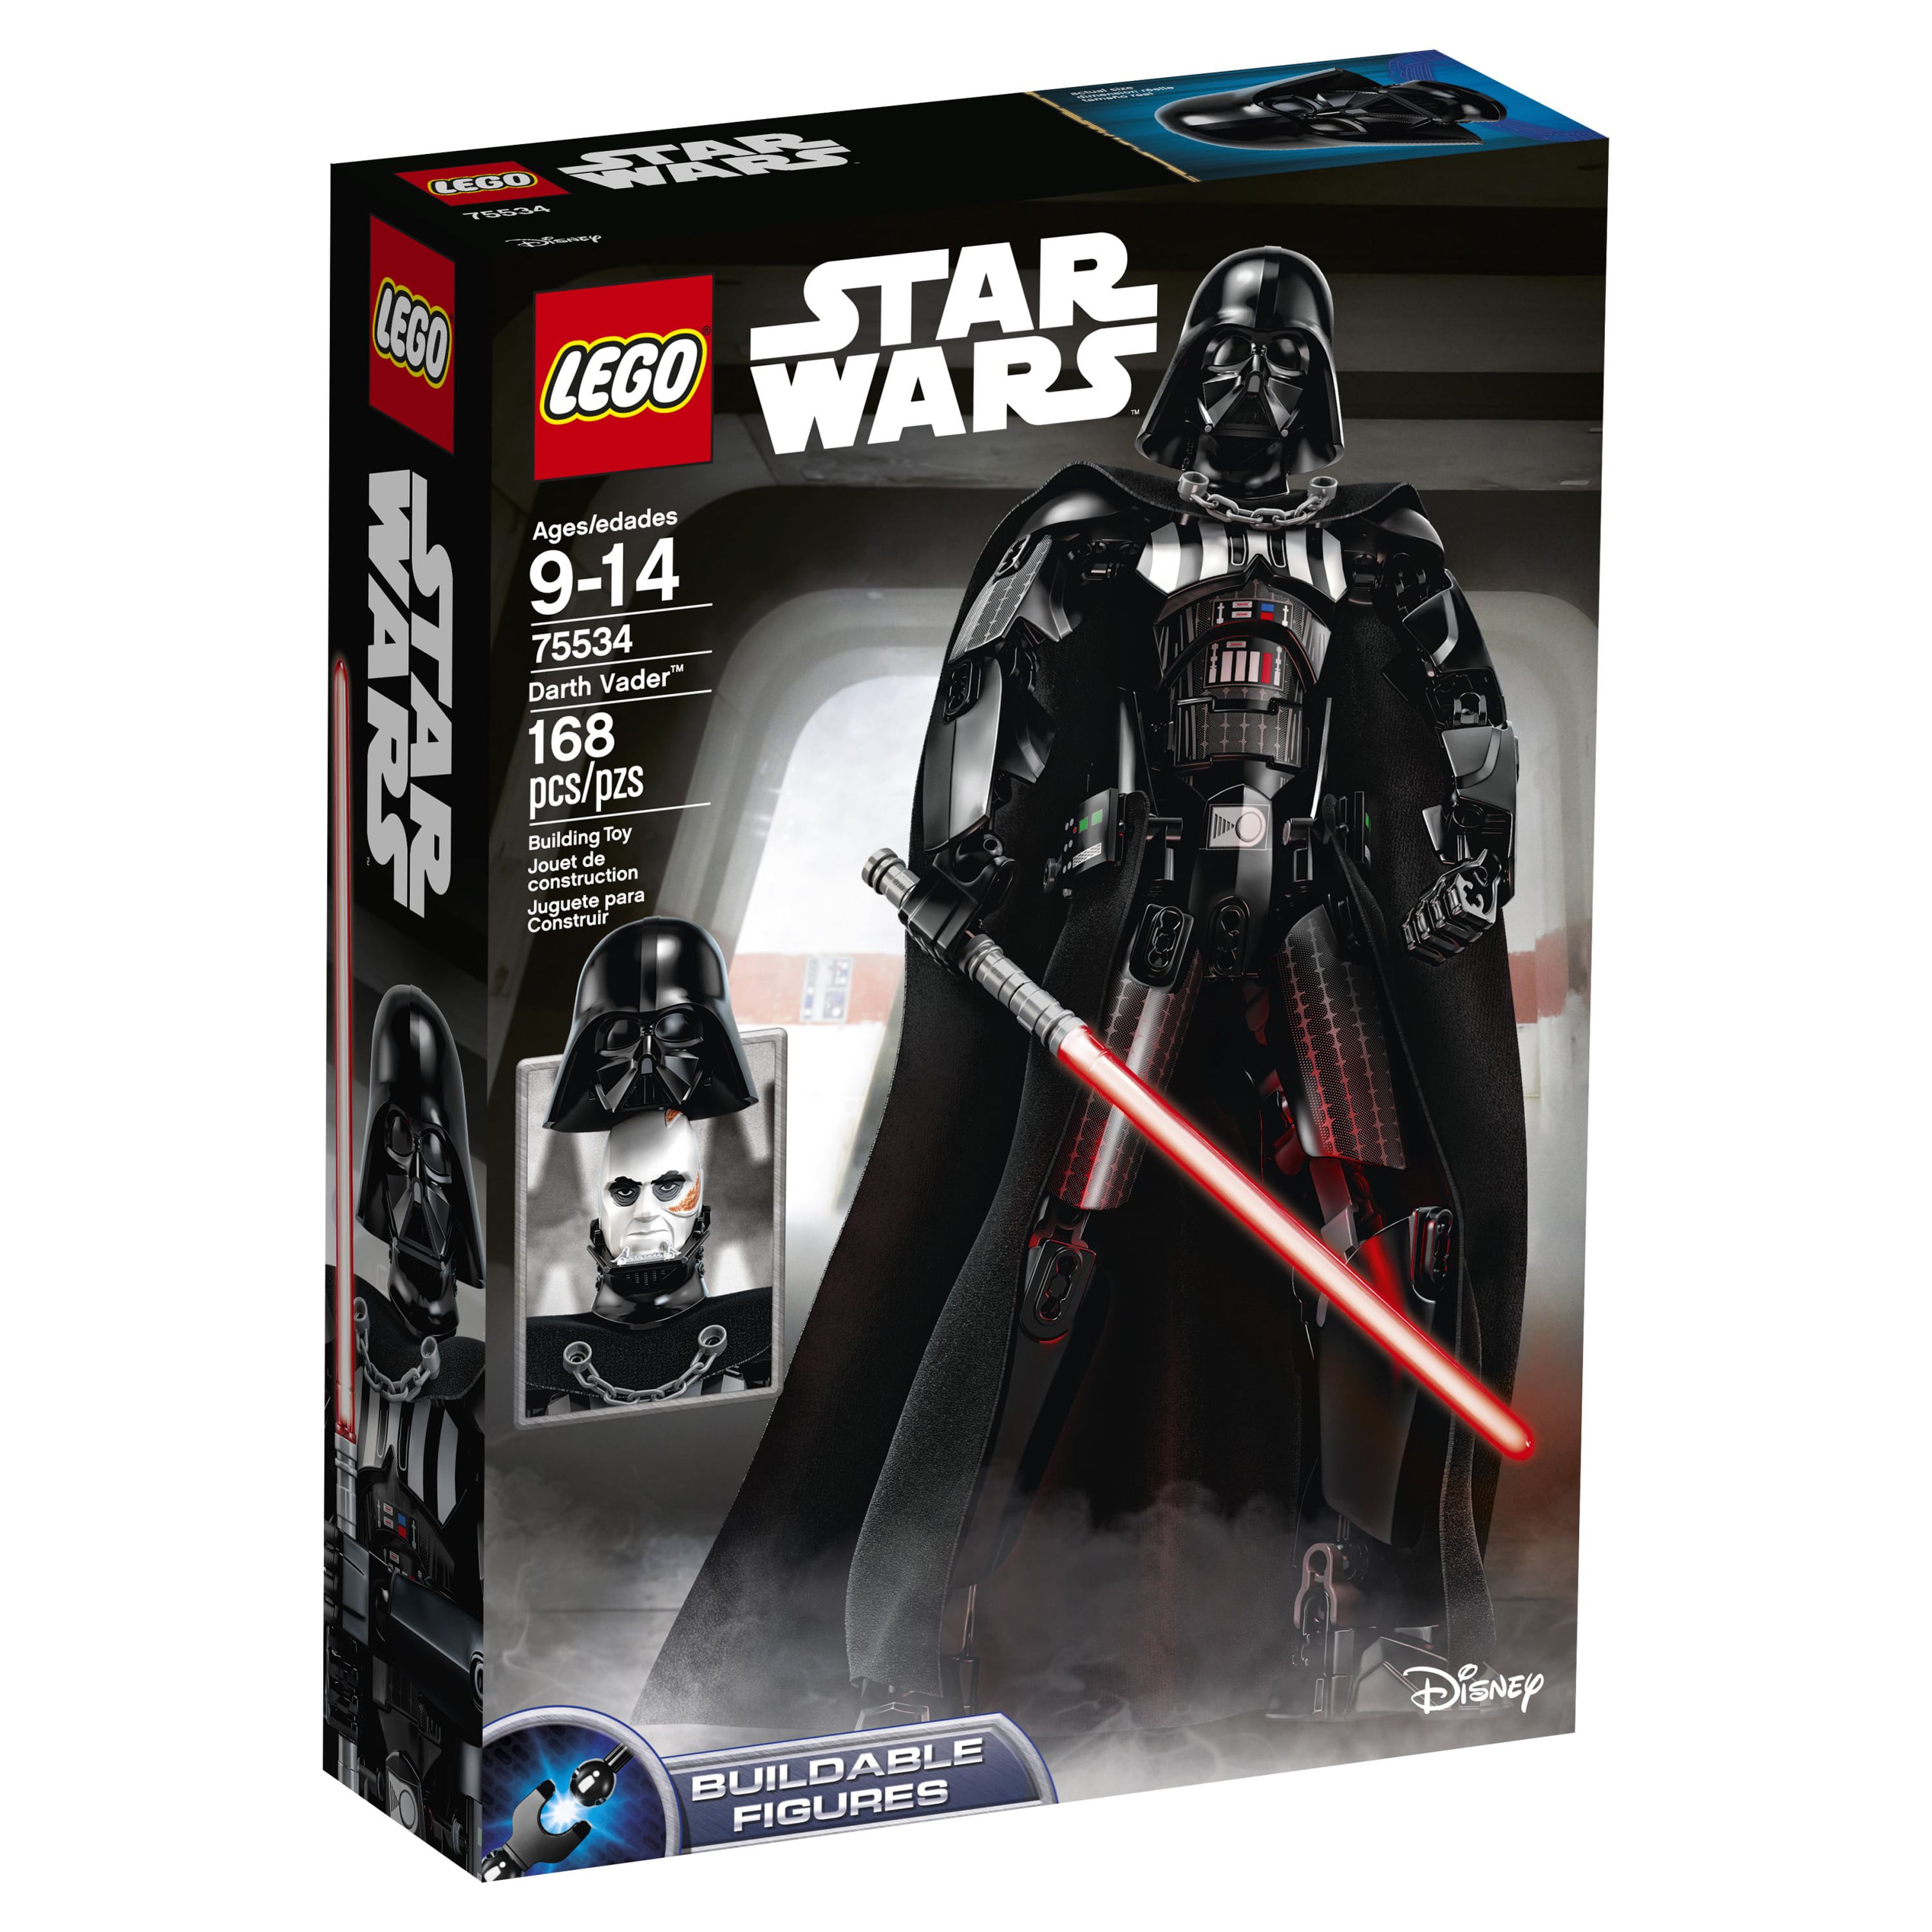 LEGO Star Wars Darth Vader 75534 - image 4 of 5